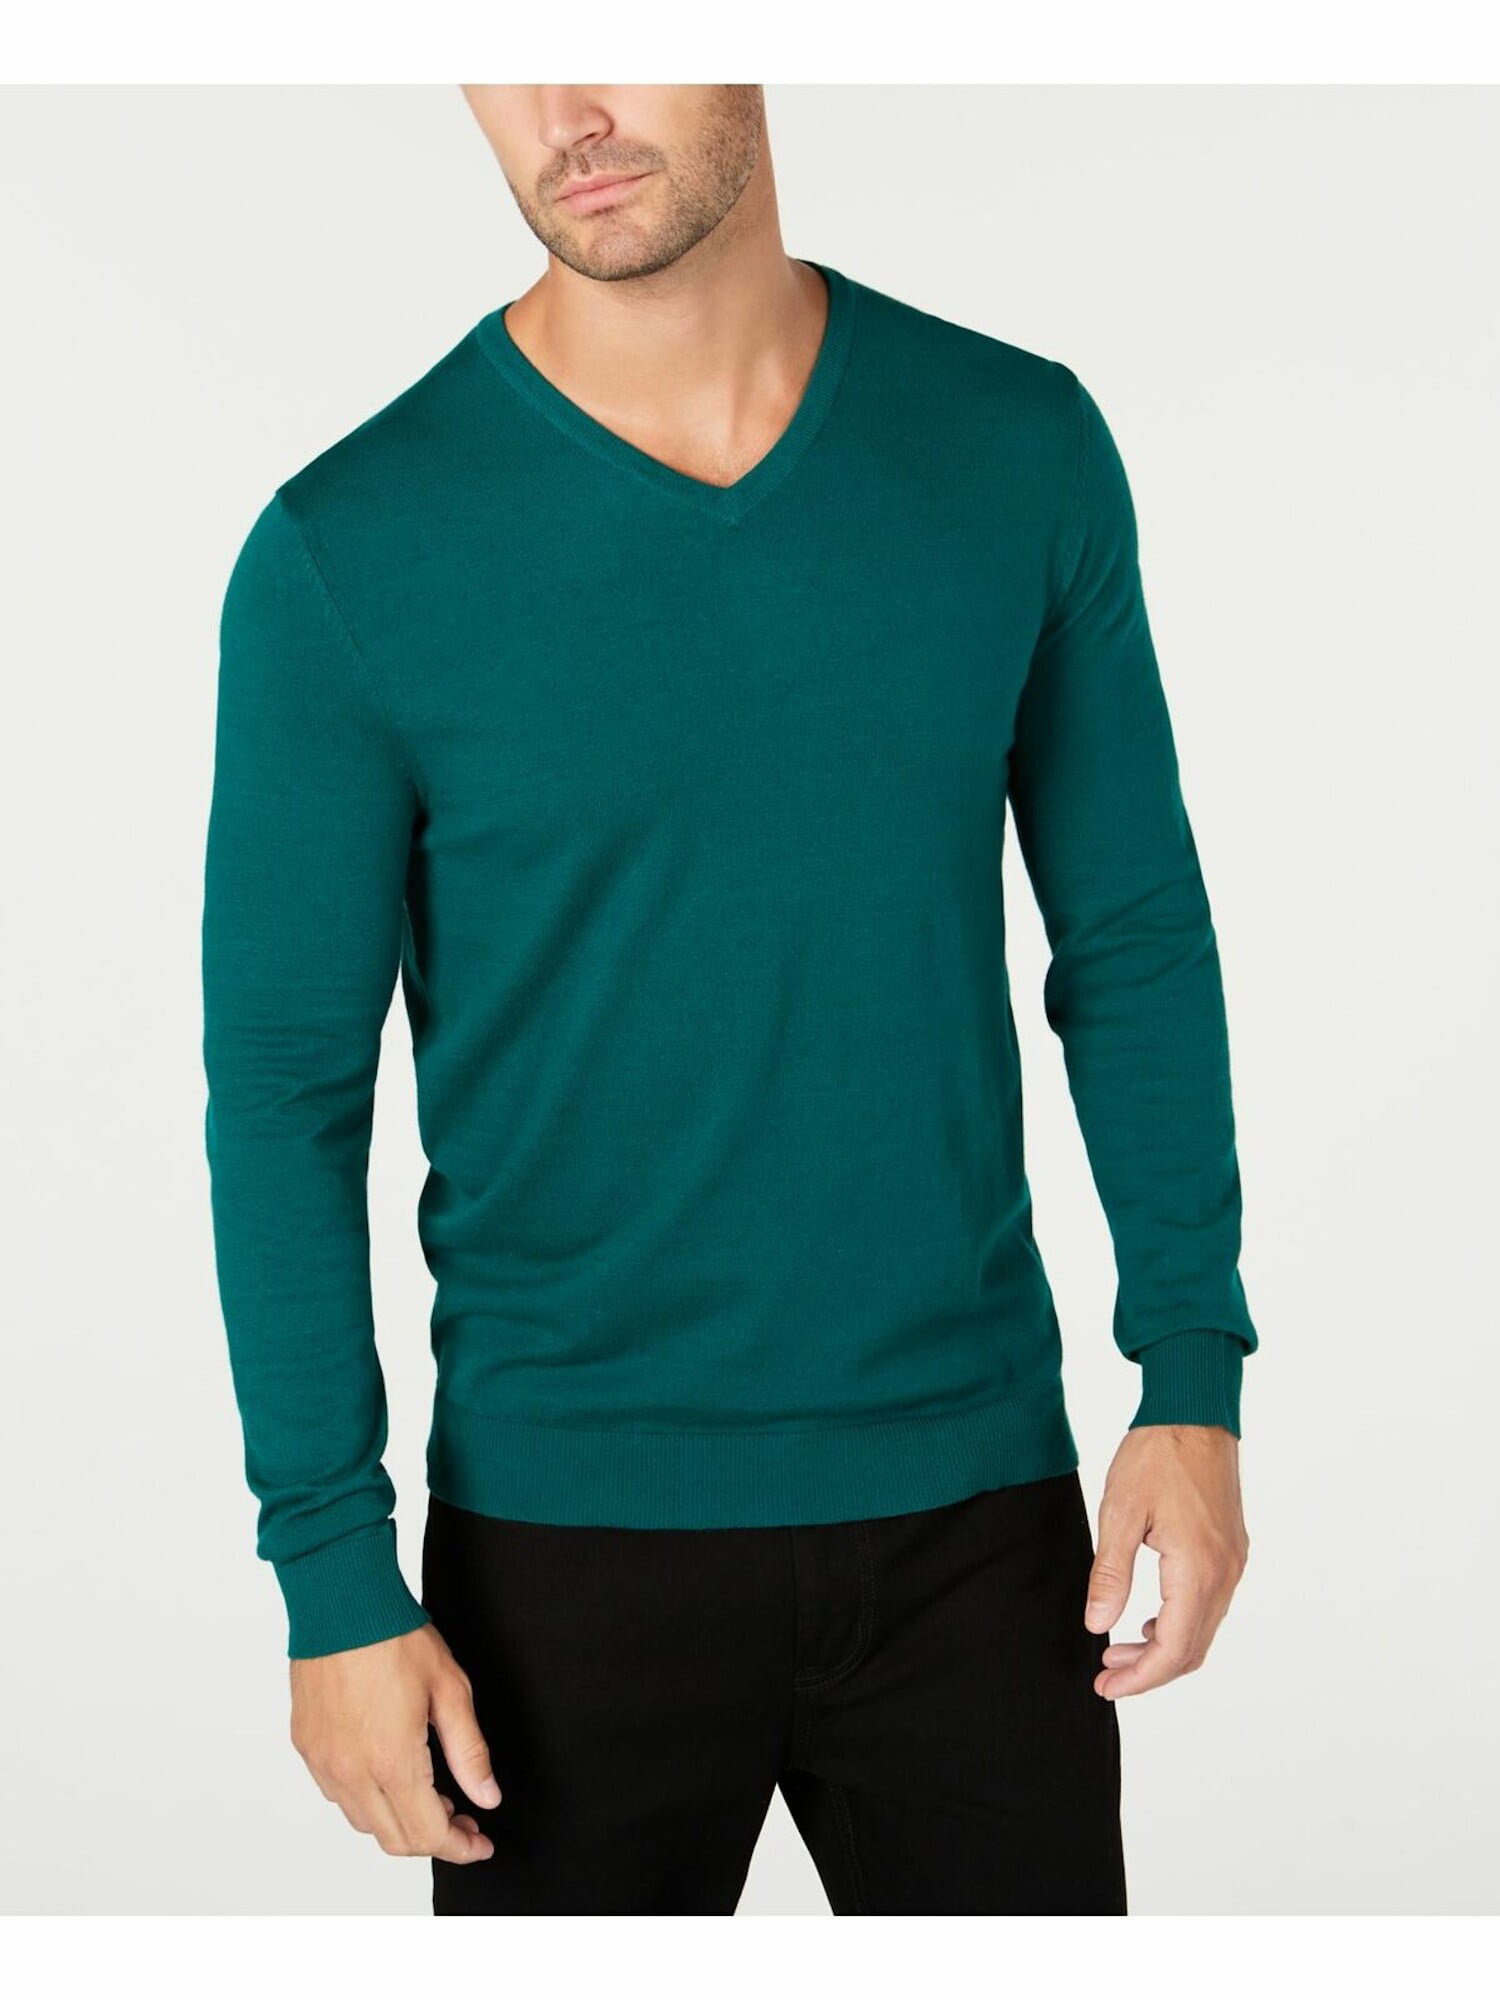 Doublju Mens V-Neck Sweater with Contrast Detail